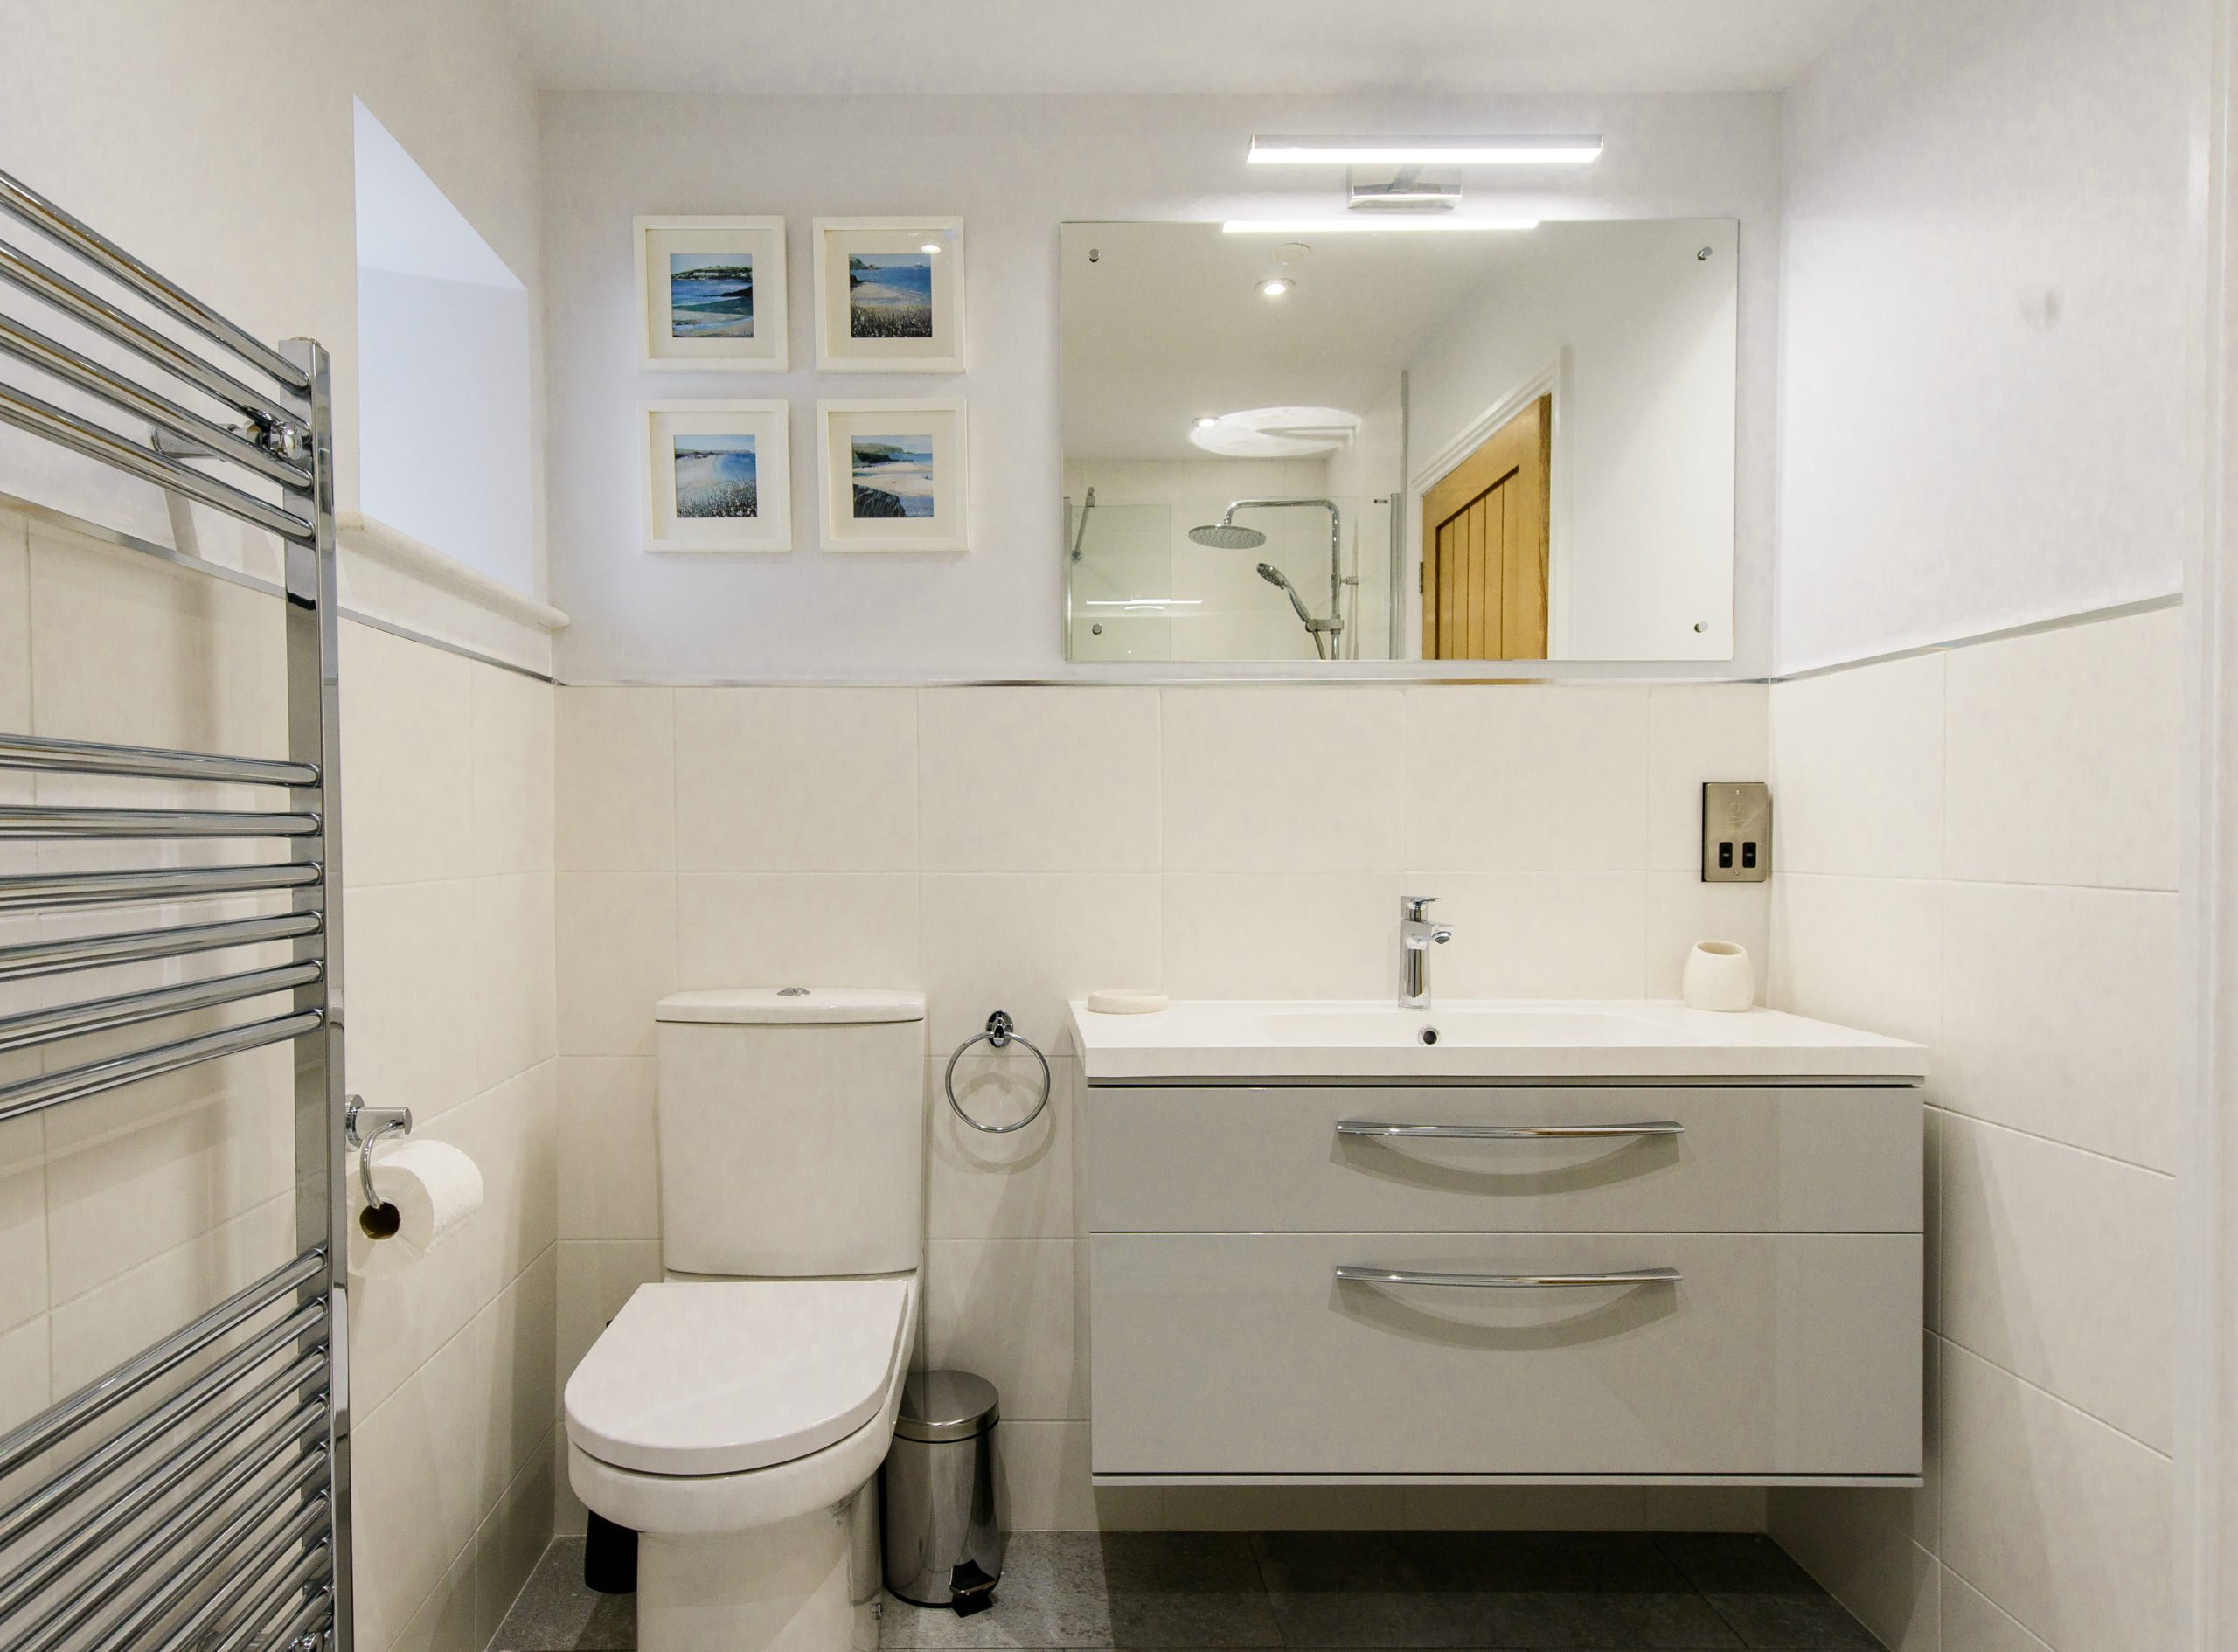 Clean white bathroom refurbishment